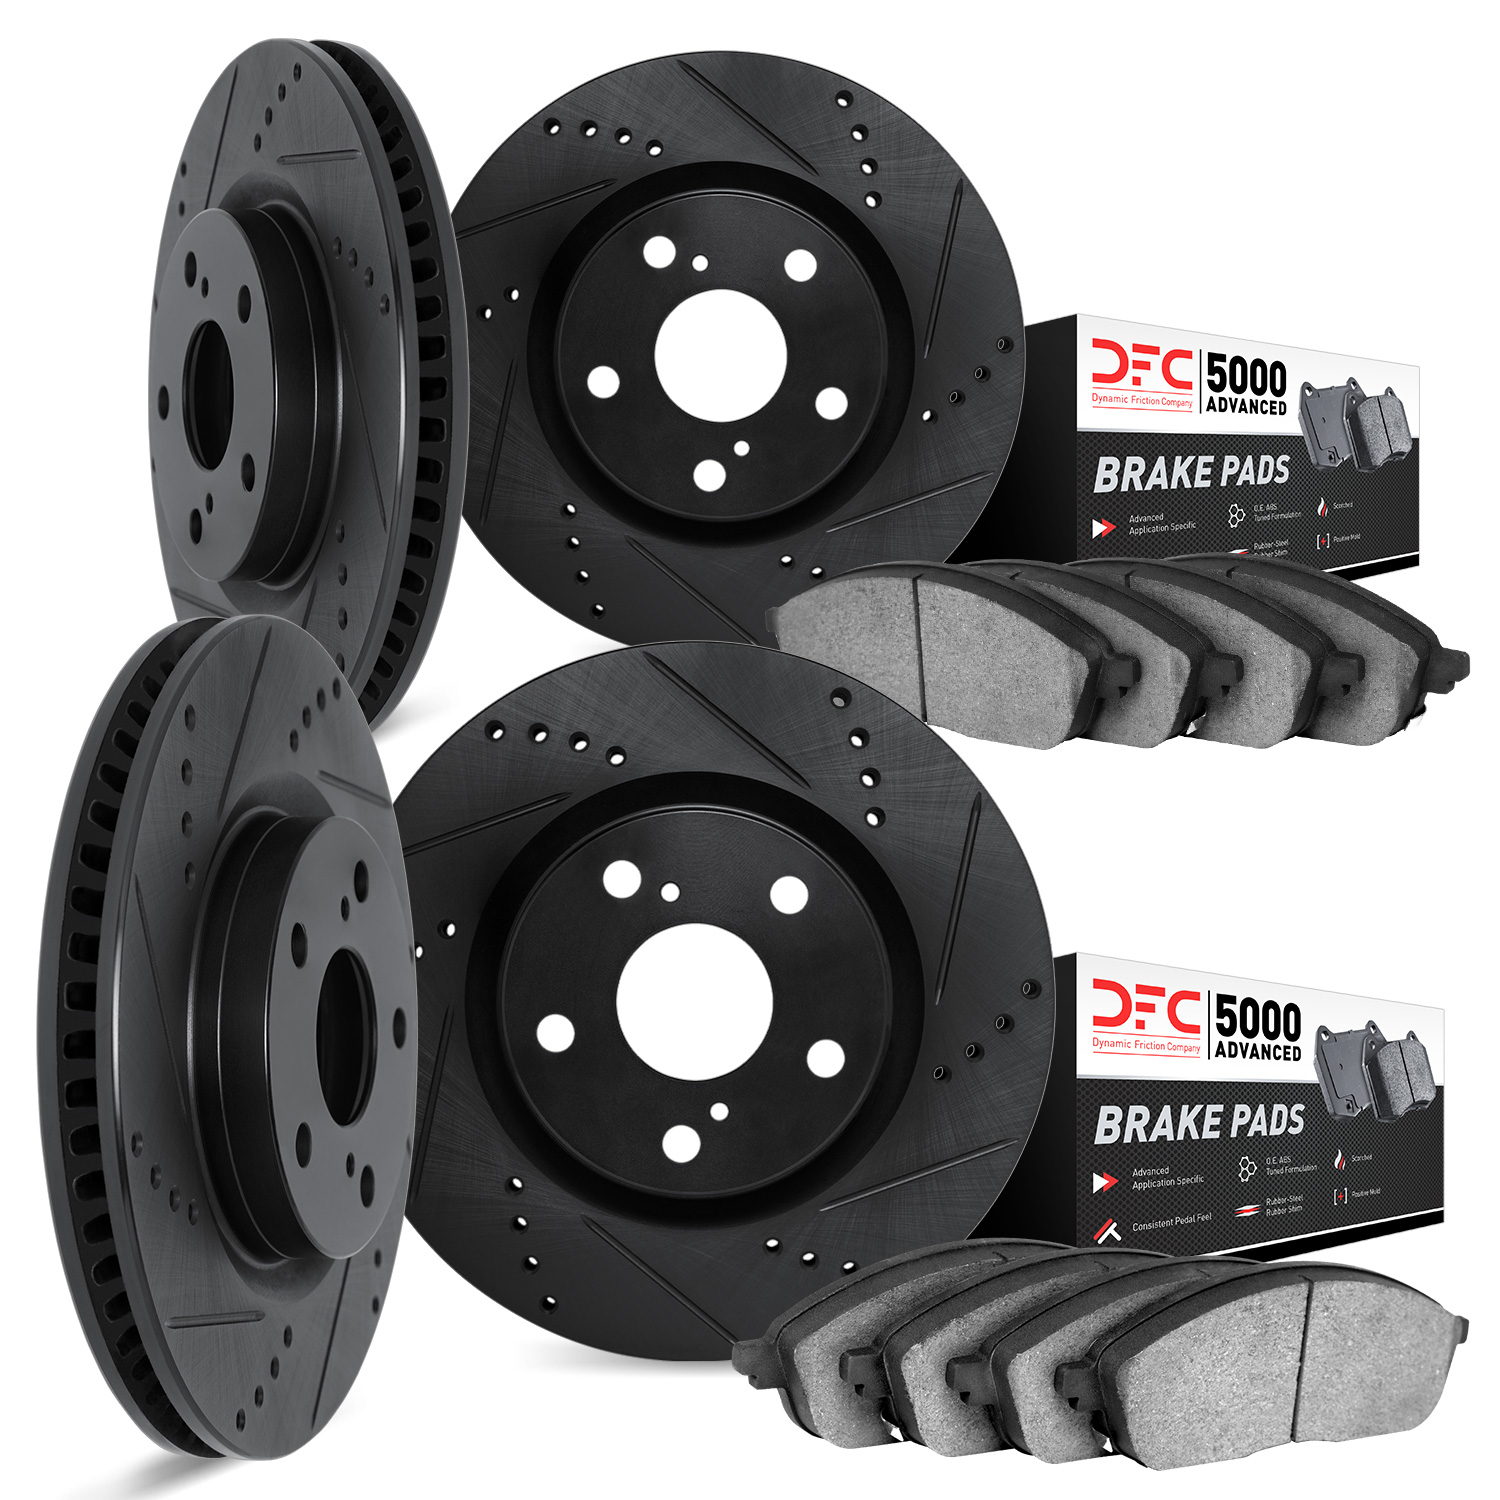 8504-74084 Drilled/Slotted Brake Rotors w/5000 Advanced Brake Pads Kit [Black], 2003-2015 Multiple Makes/Models, Position: Front